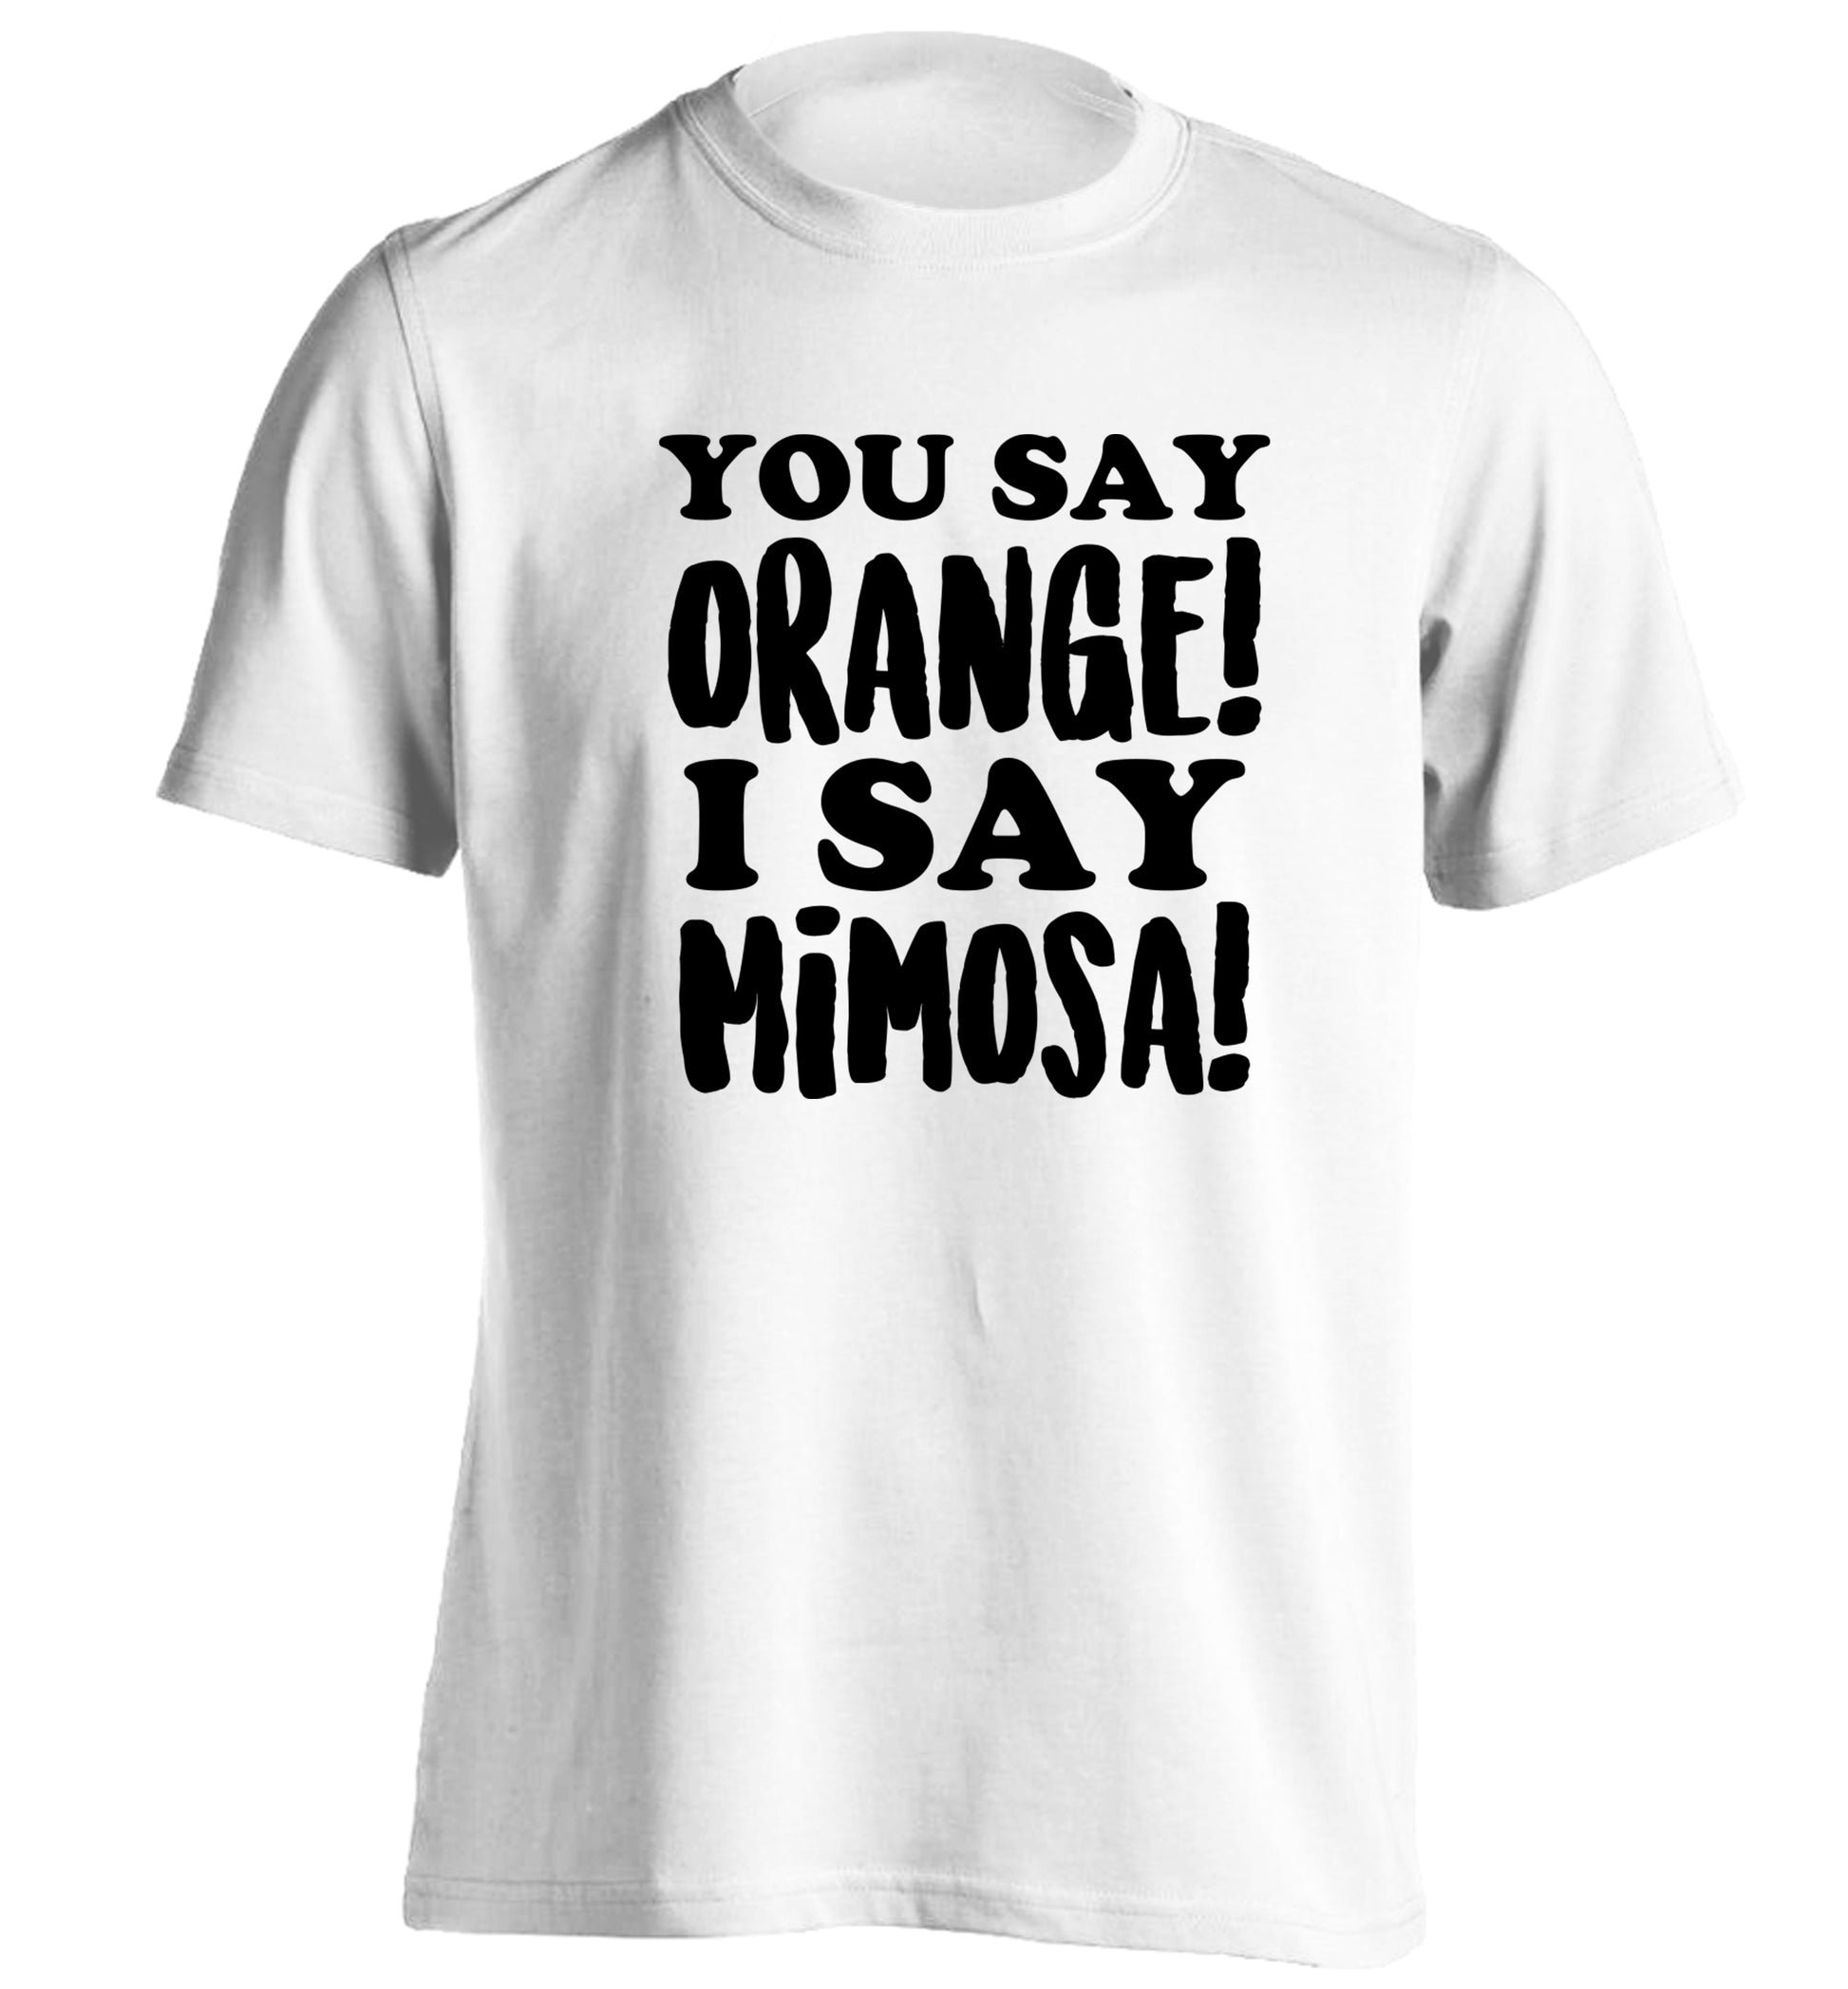 You say orange I say mimosa! adults unisex white Tshirt 2XL